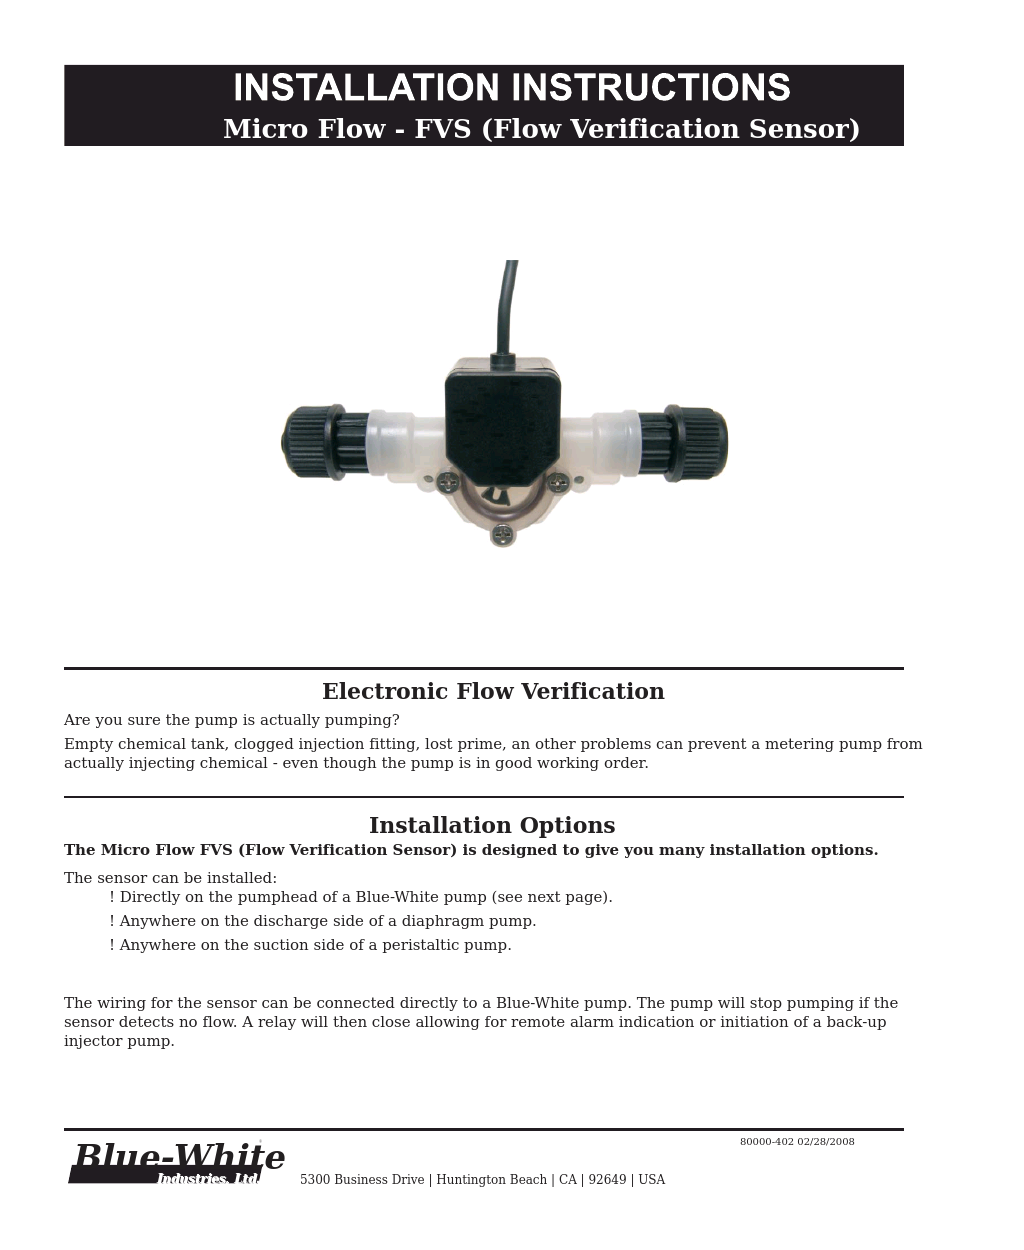 Flow Verification Sensor (FVS)